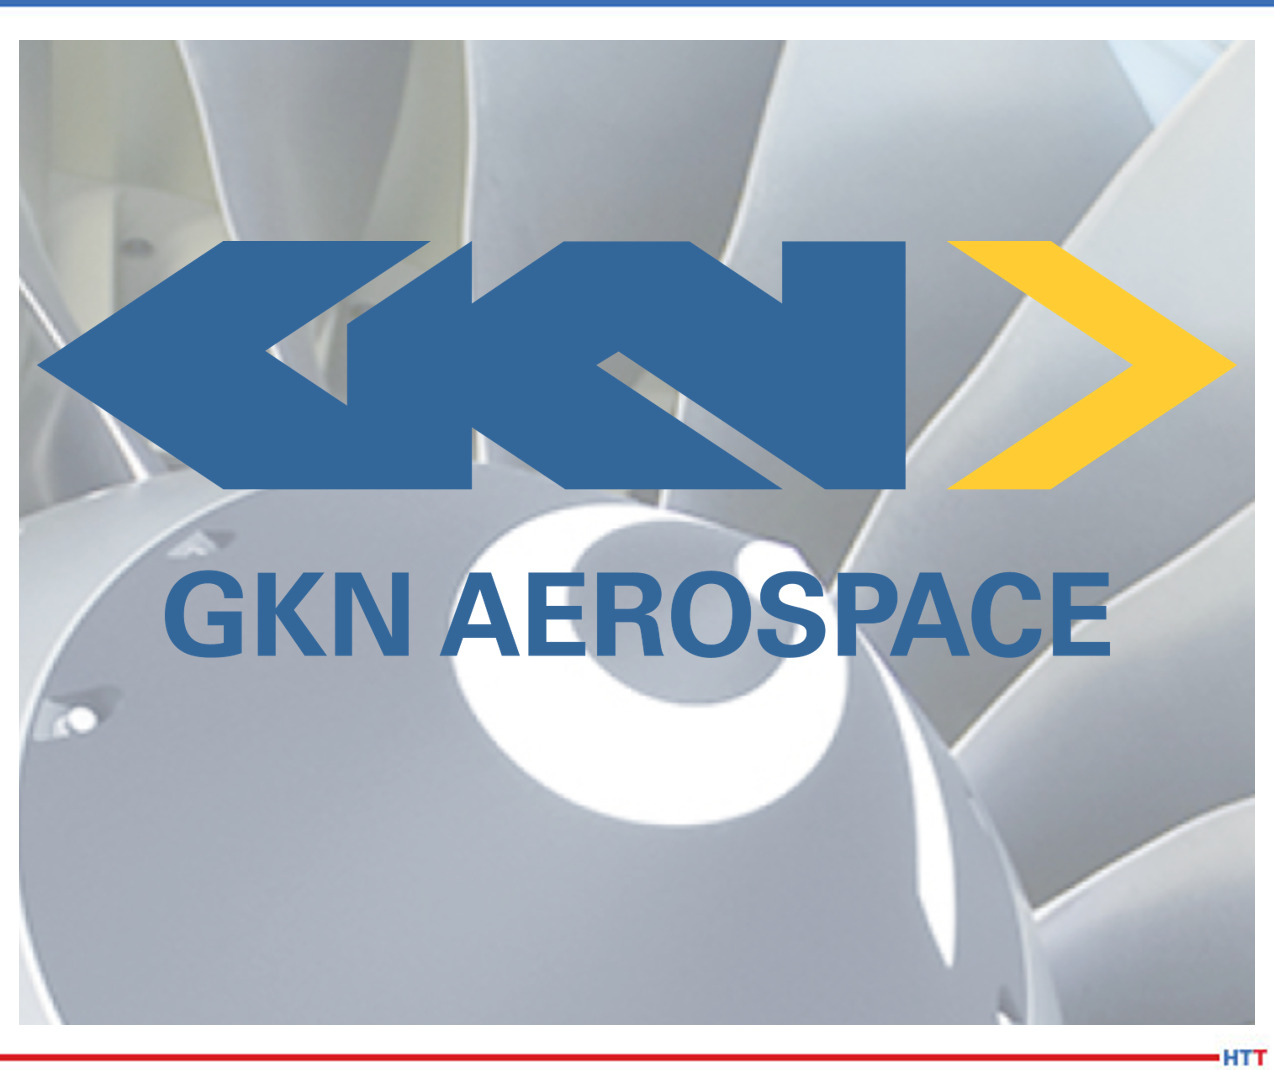 Engine Fan with GKN Aerospace logo